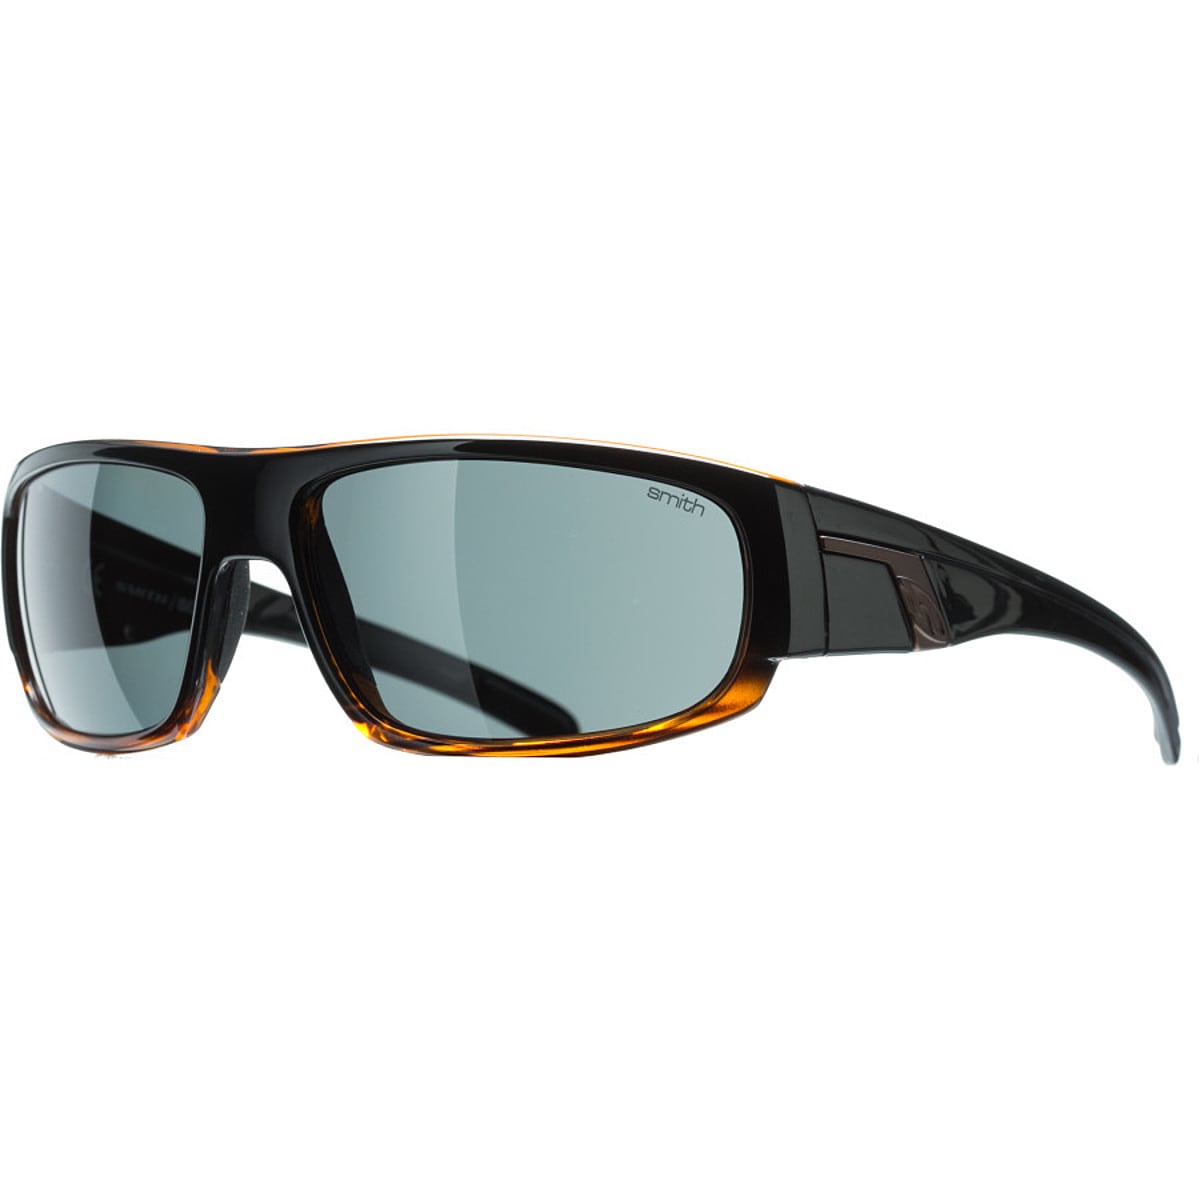 Smith Sunglasses Canada | Buy Sunglasses Online